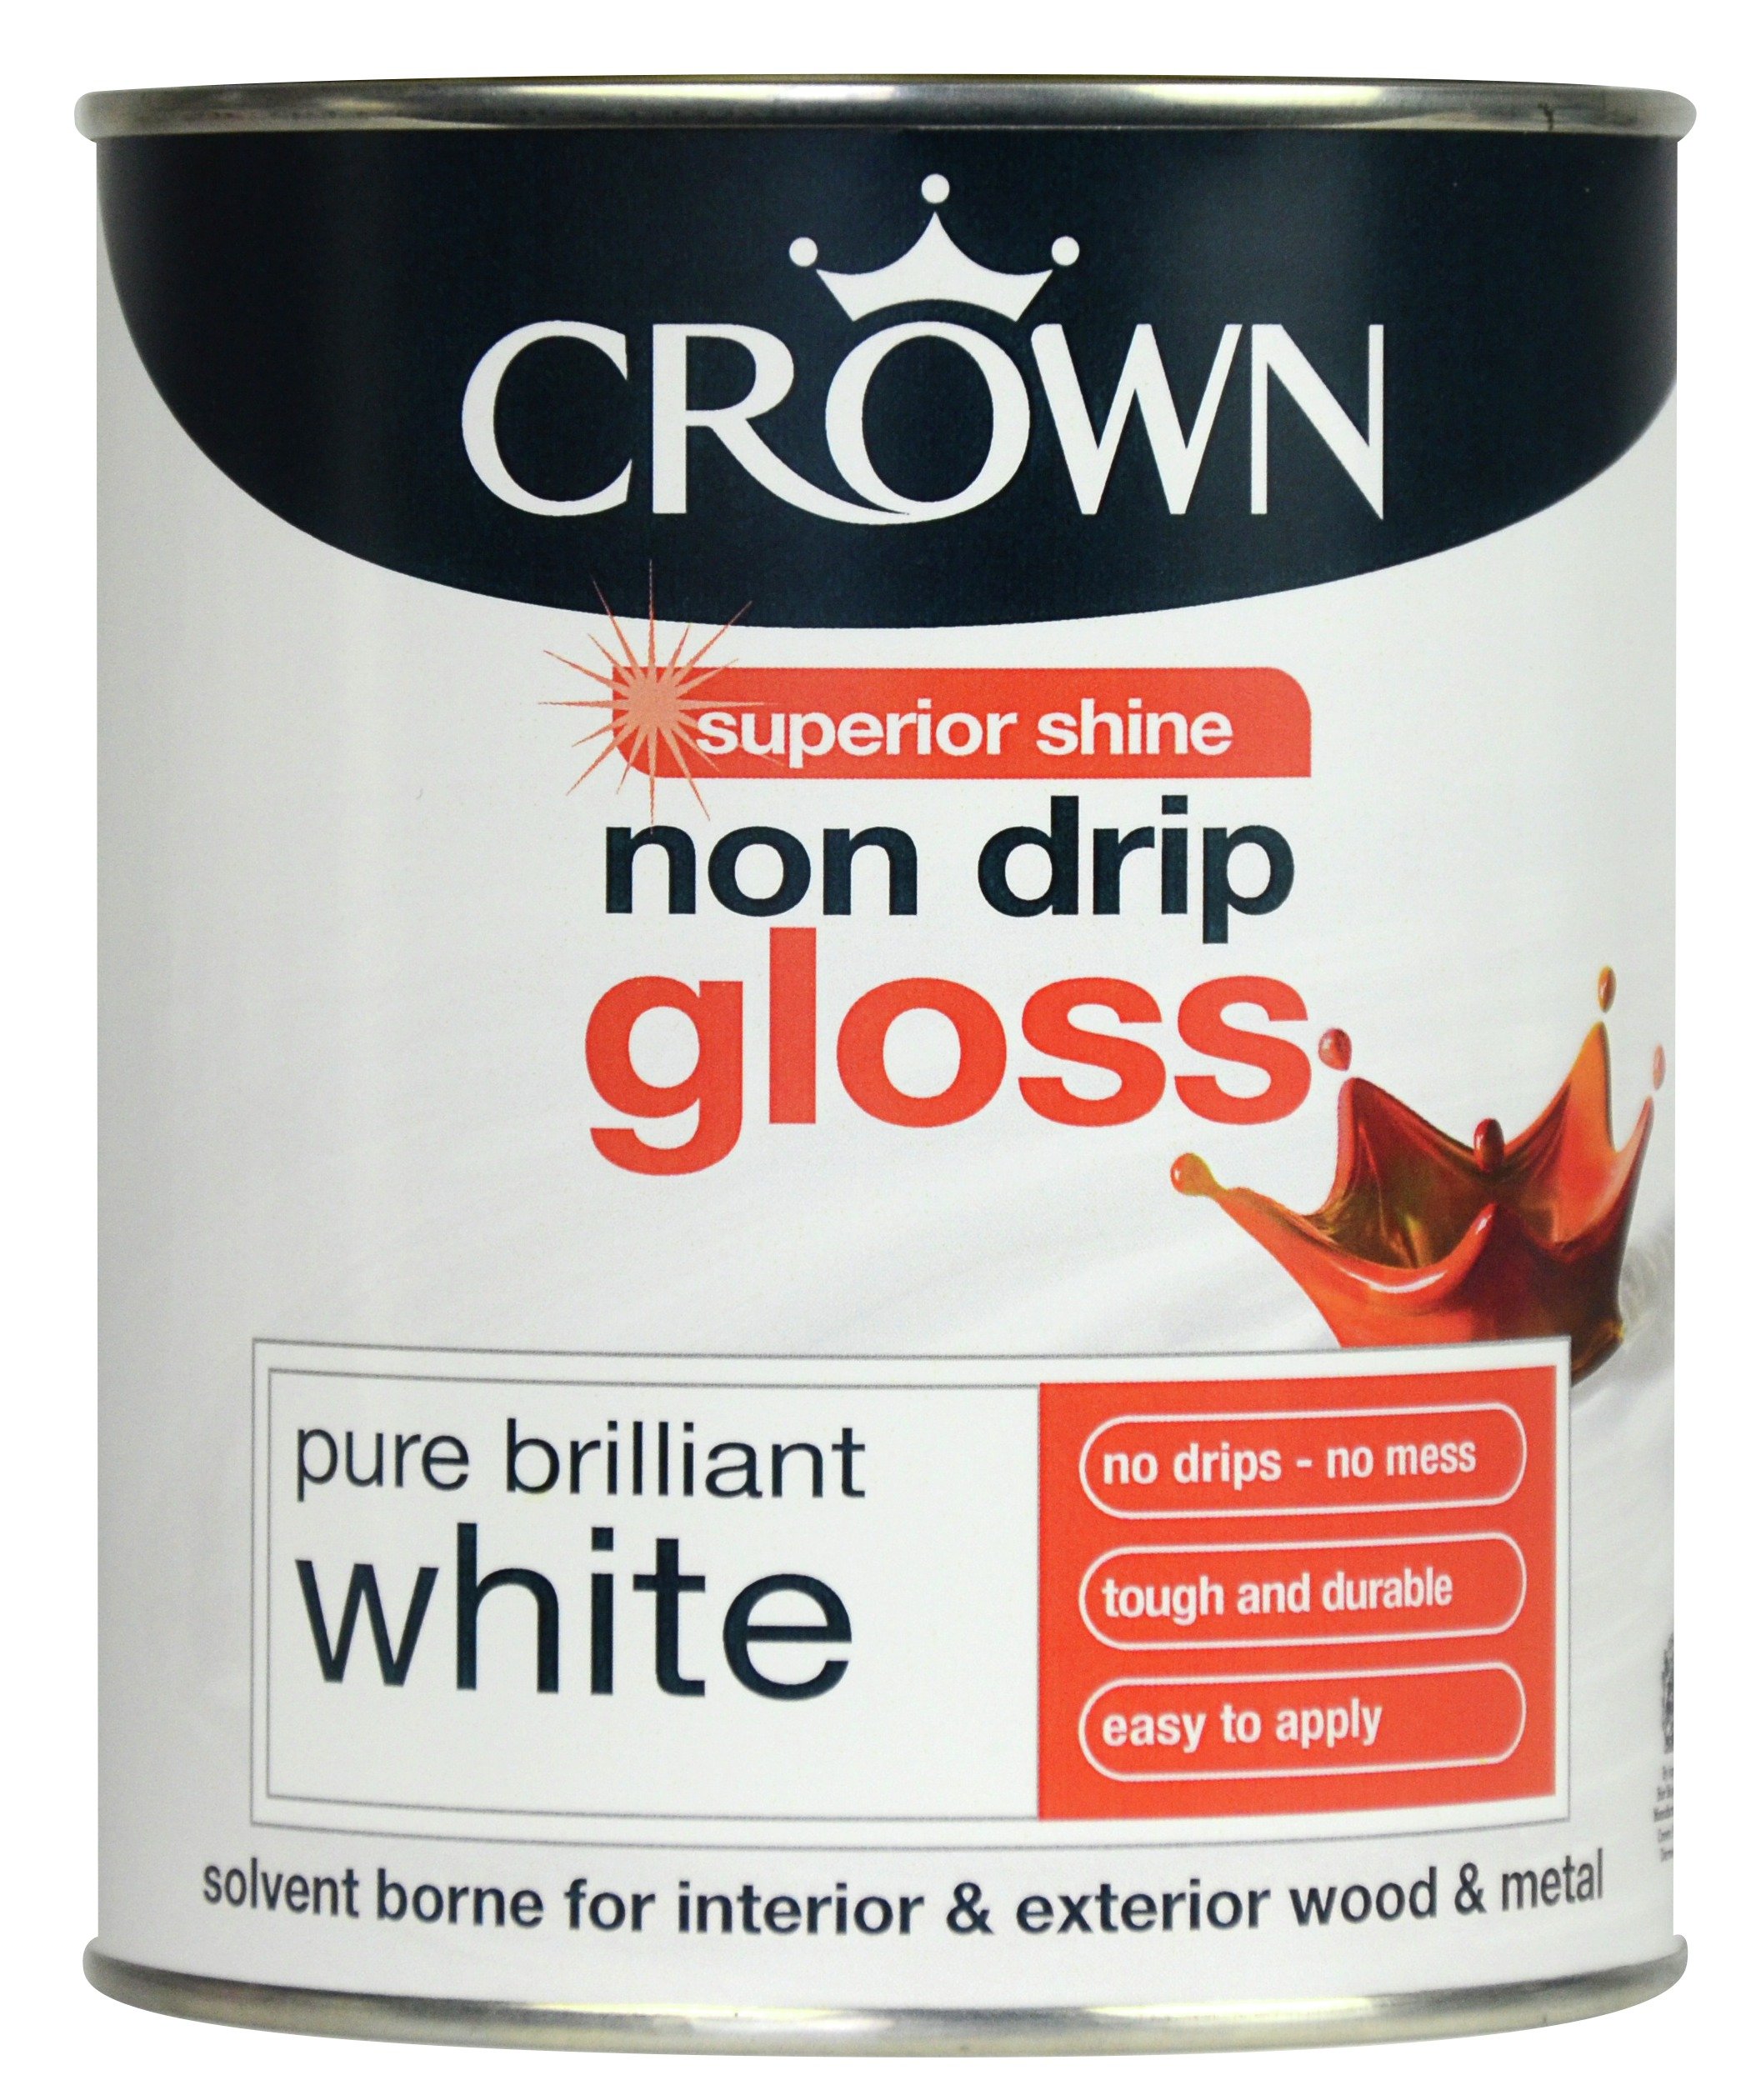 Crown Non Drip Gloss Paint 750ml - Pure Brilliant White